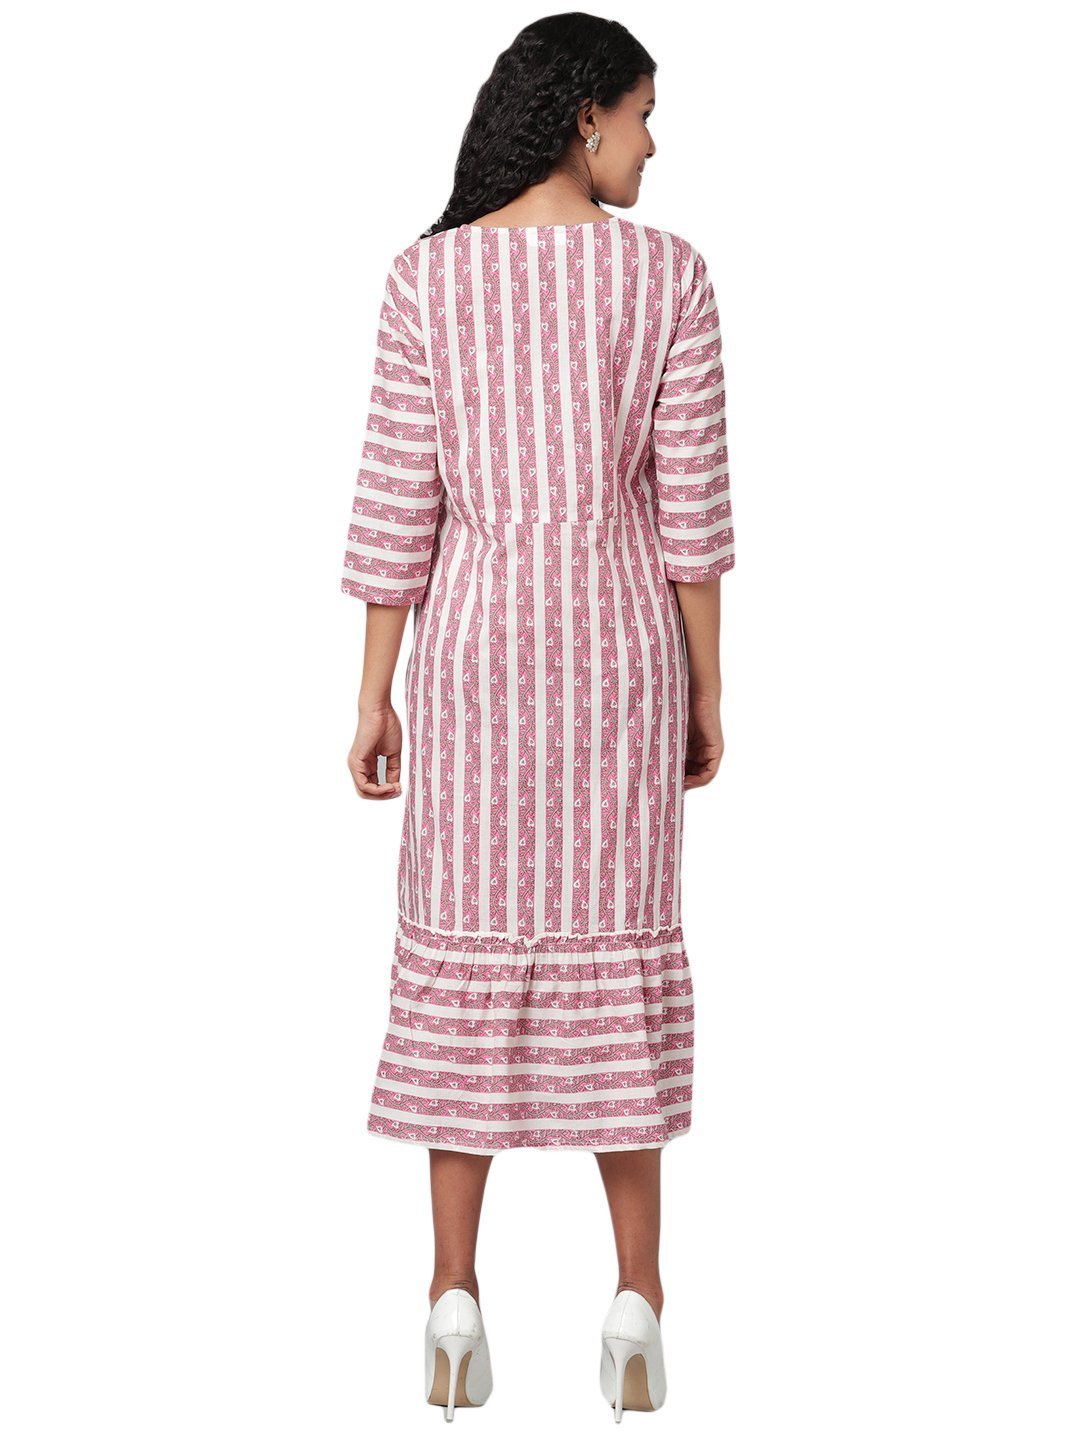 Women's Multi Printed 3/4 Sleeve Cotton Round Neck Casual Dress - Myshka